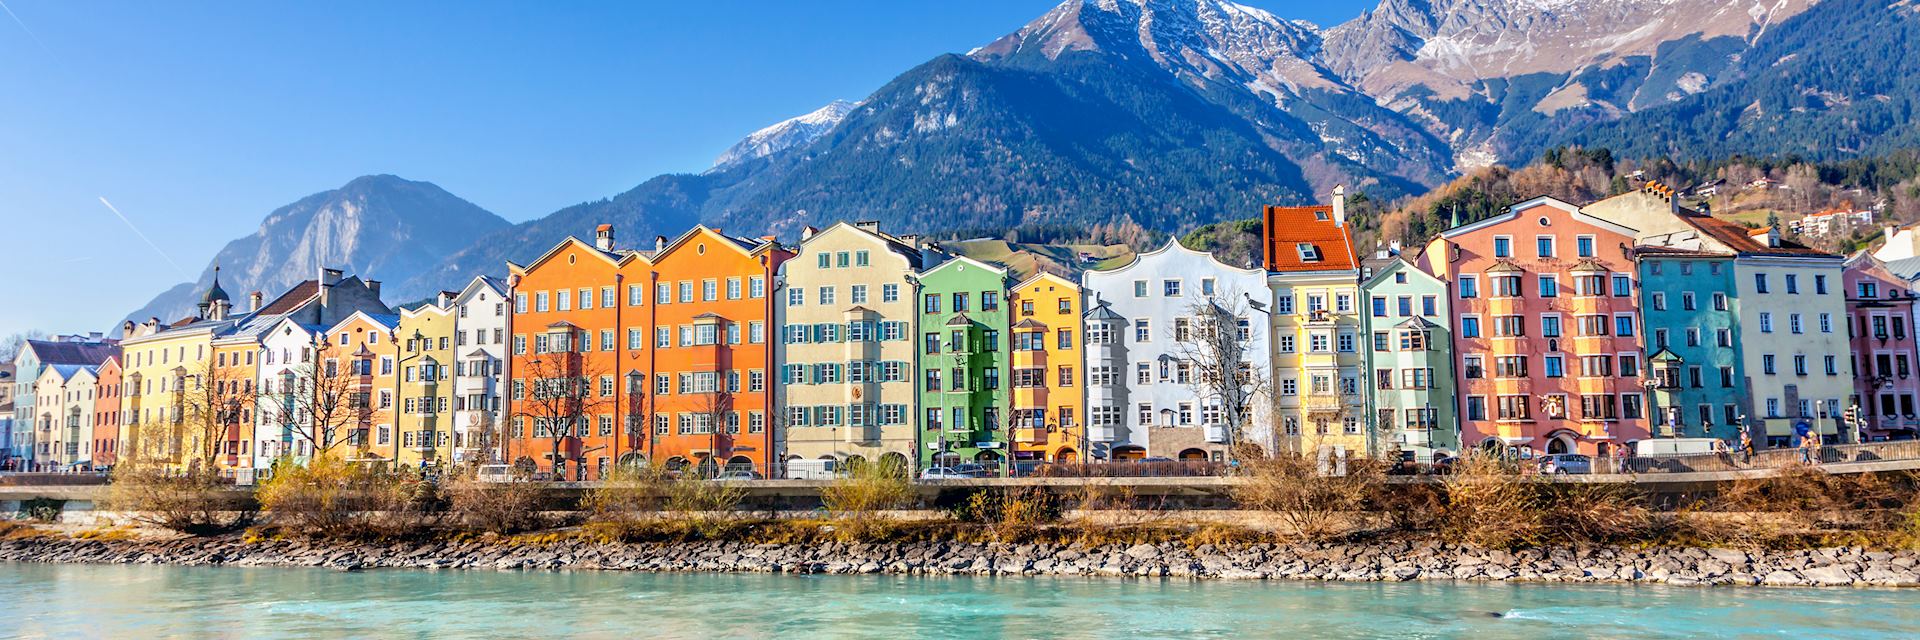 Innsbruck cityscape